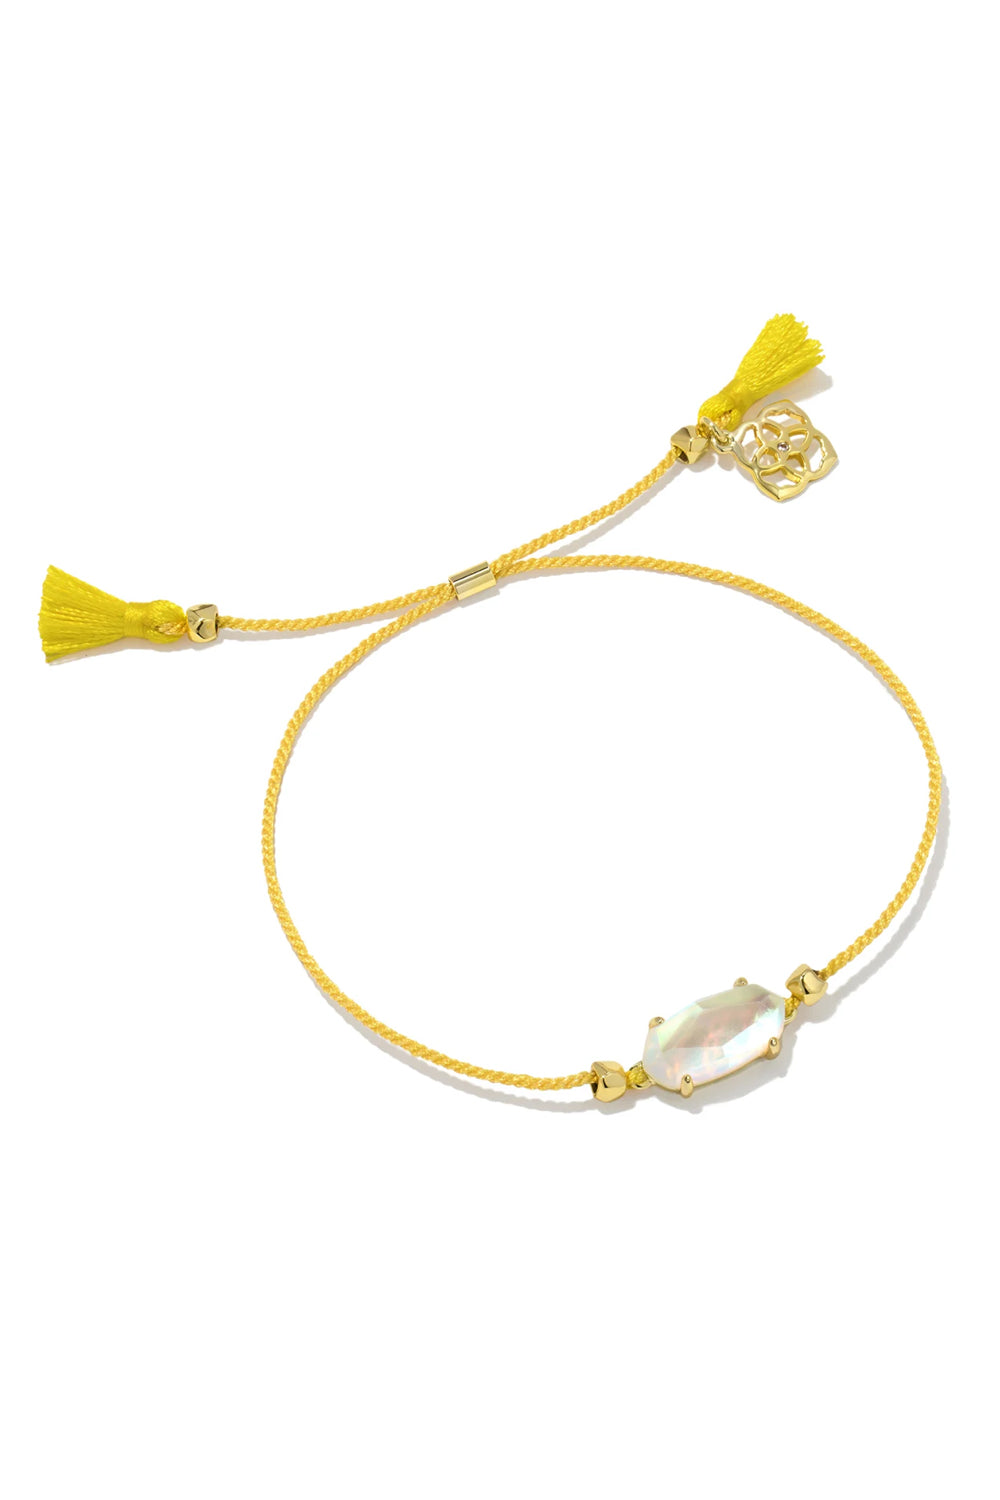 Kendra Scott: Everlyne Yellow Cord Friendship Bracelet - Gold Dichroic Glass | Makk Fashions